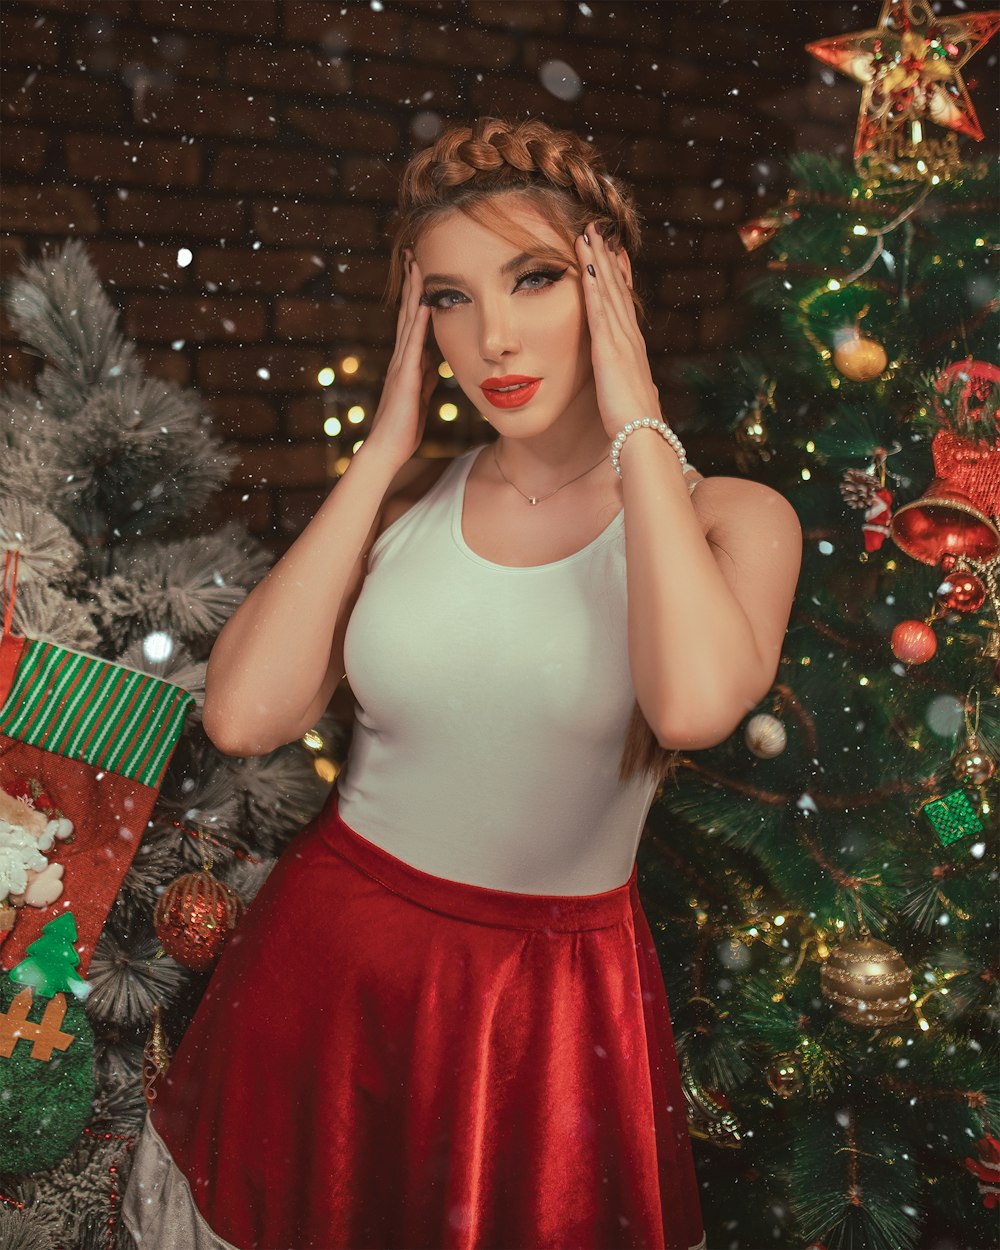 selective focus photography of woman wearing Santa costume beside Christmas tree